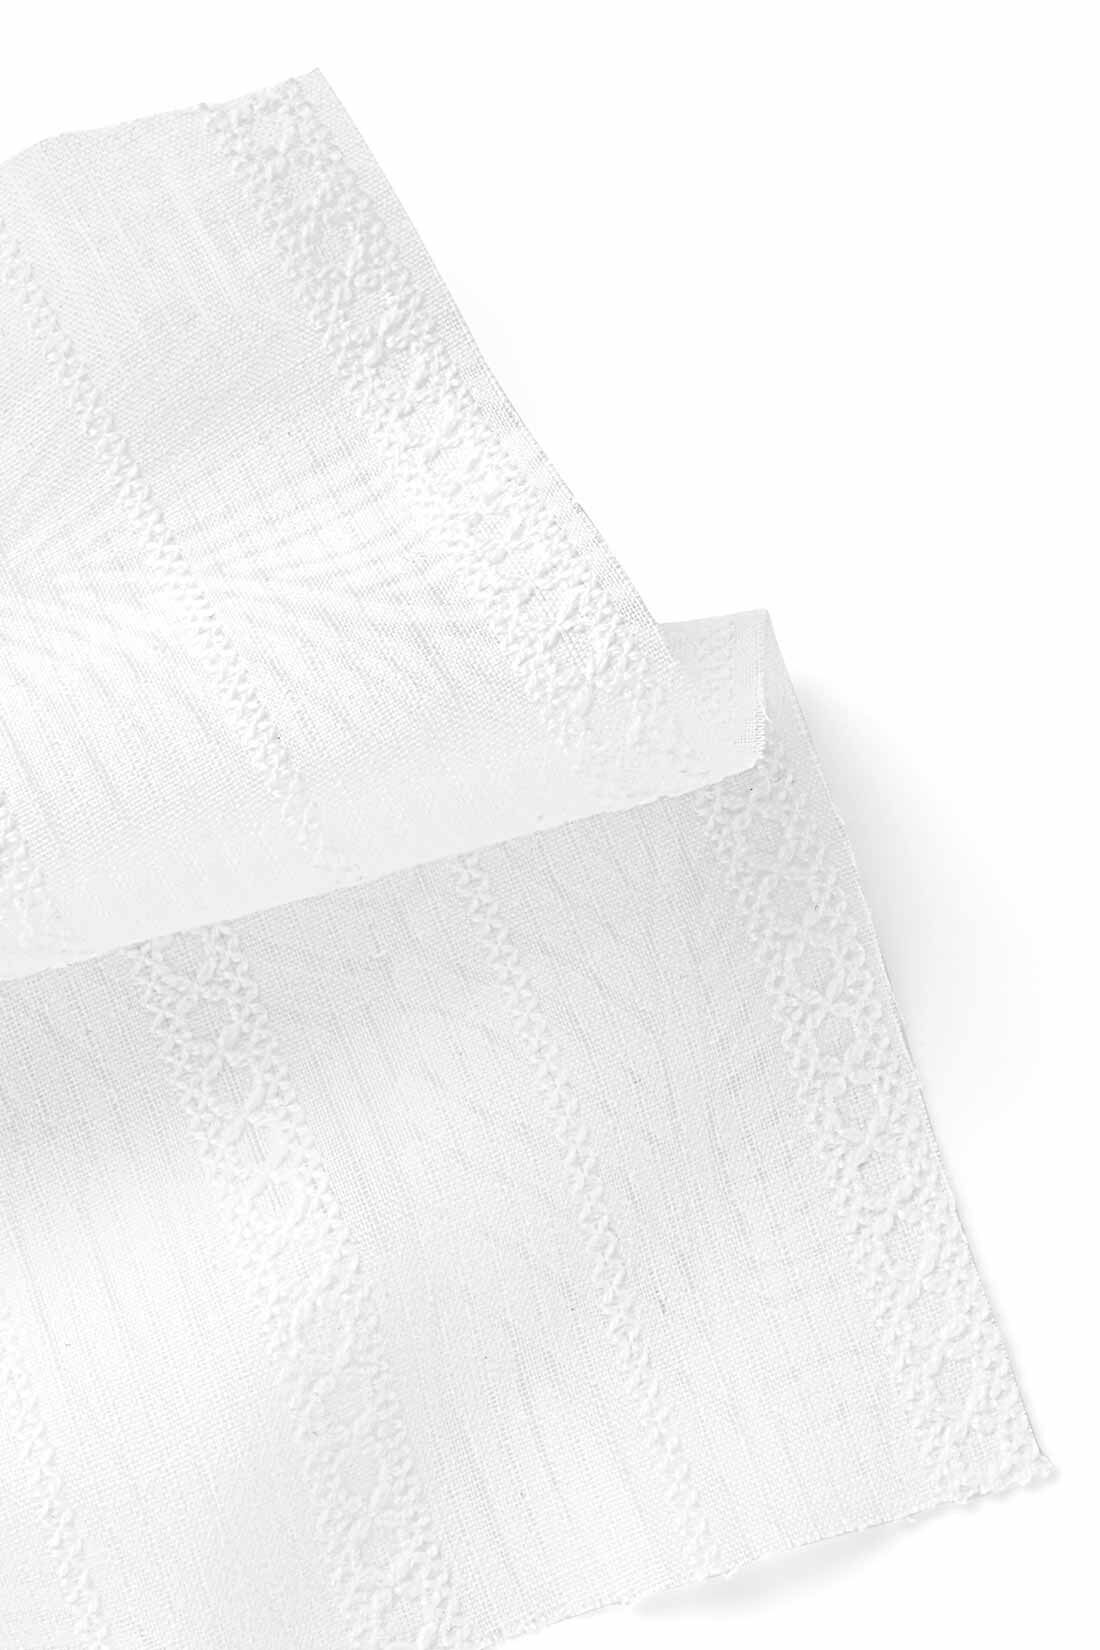 MEDE19F|MEDE19F　オパール加工リーフ柄ブラウス〈ホワイト〉|オパール加工でリーフ柄を表現した、薄手の綿混素材。ストライプ状の装飾刺しゅうと相まって、豊かな表情を見せています。